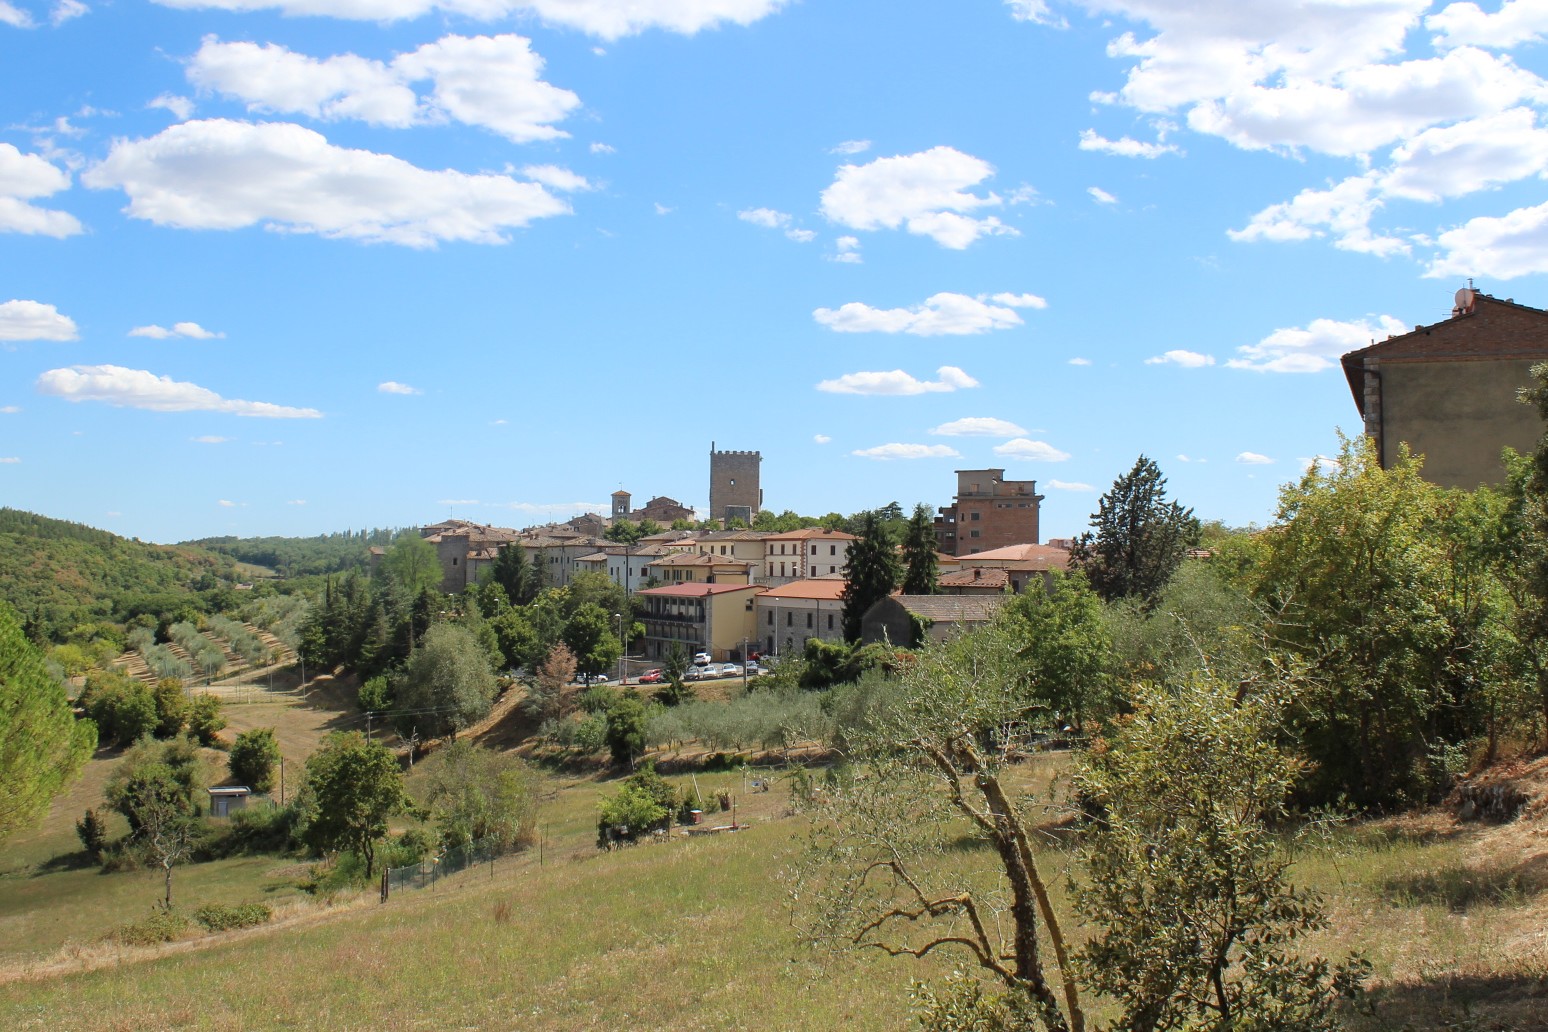 De 5 mooiste idyllische dorpjes in de Chianti wijnstreek